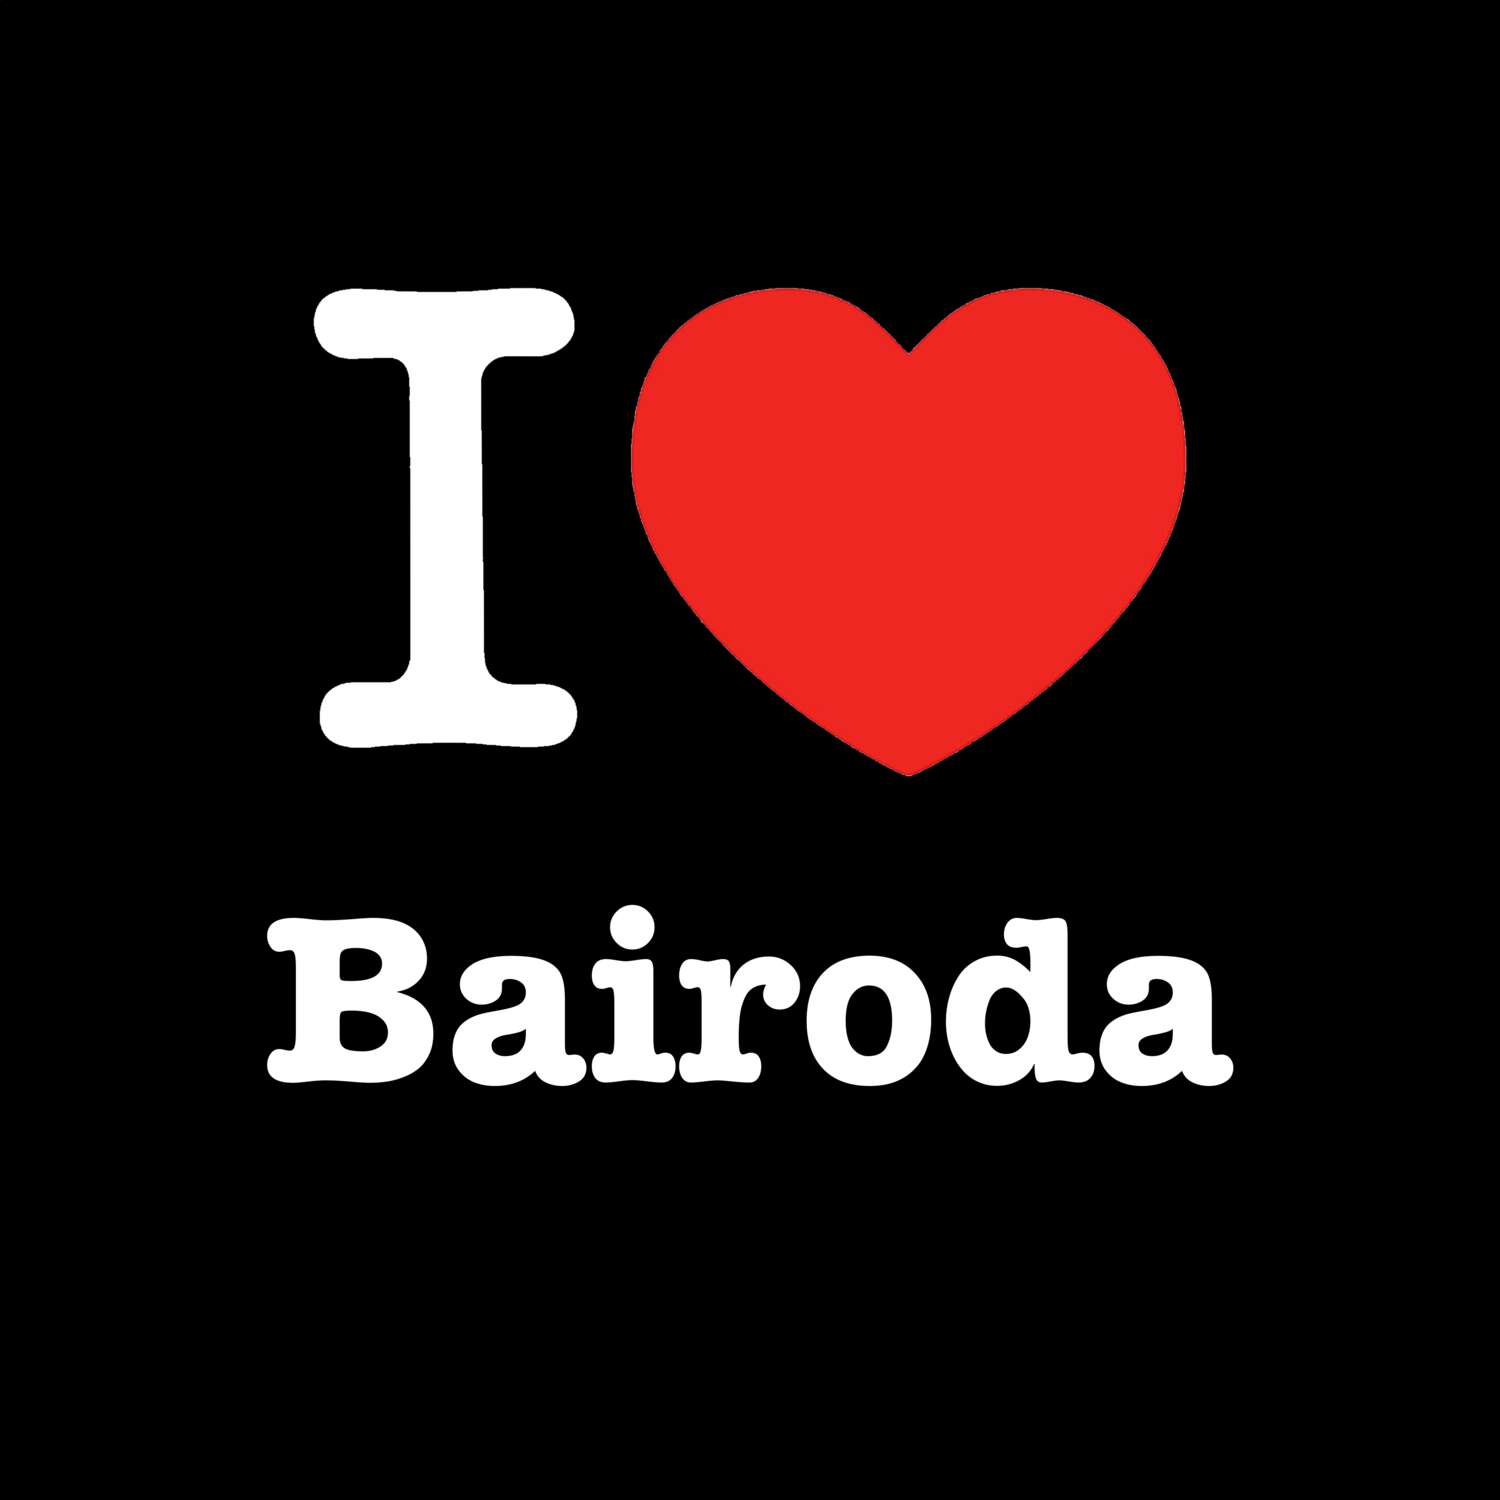 Bairoda T-Shirt »I love«